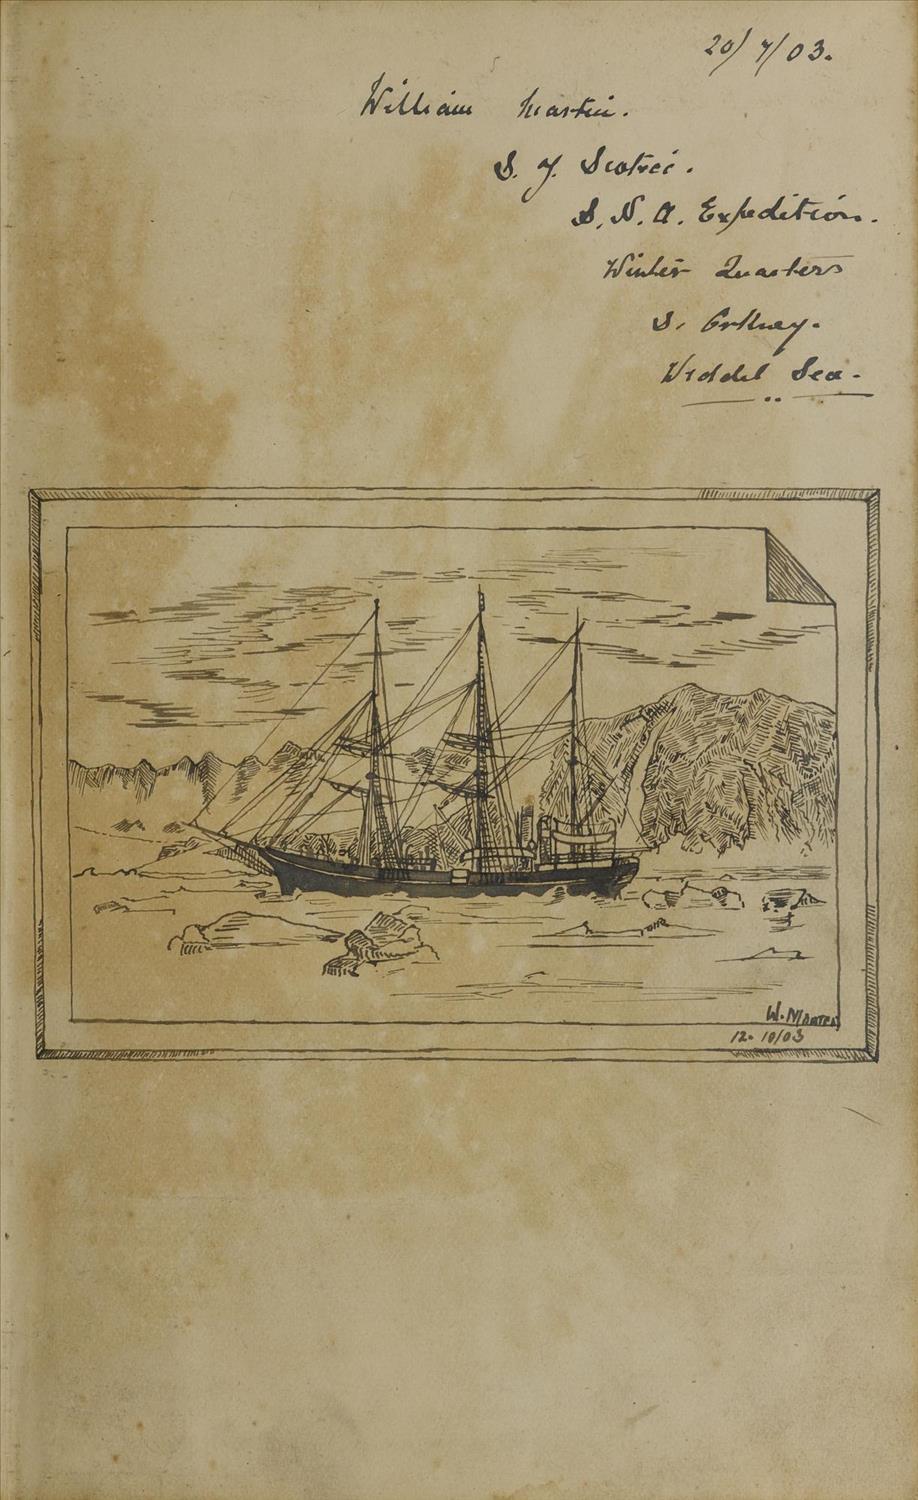 Sketchbook of William Martin, Scottish National Antarctic Expedition 1903.